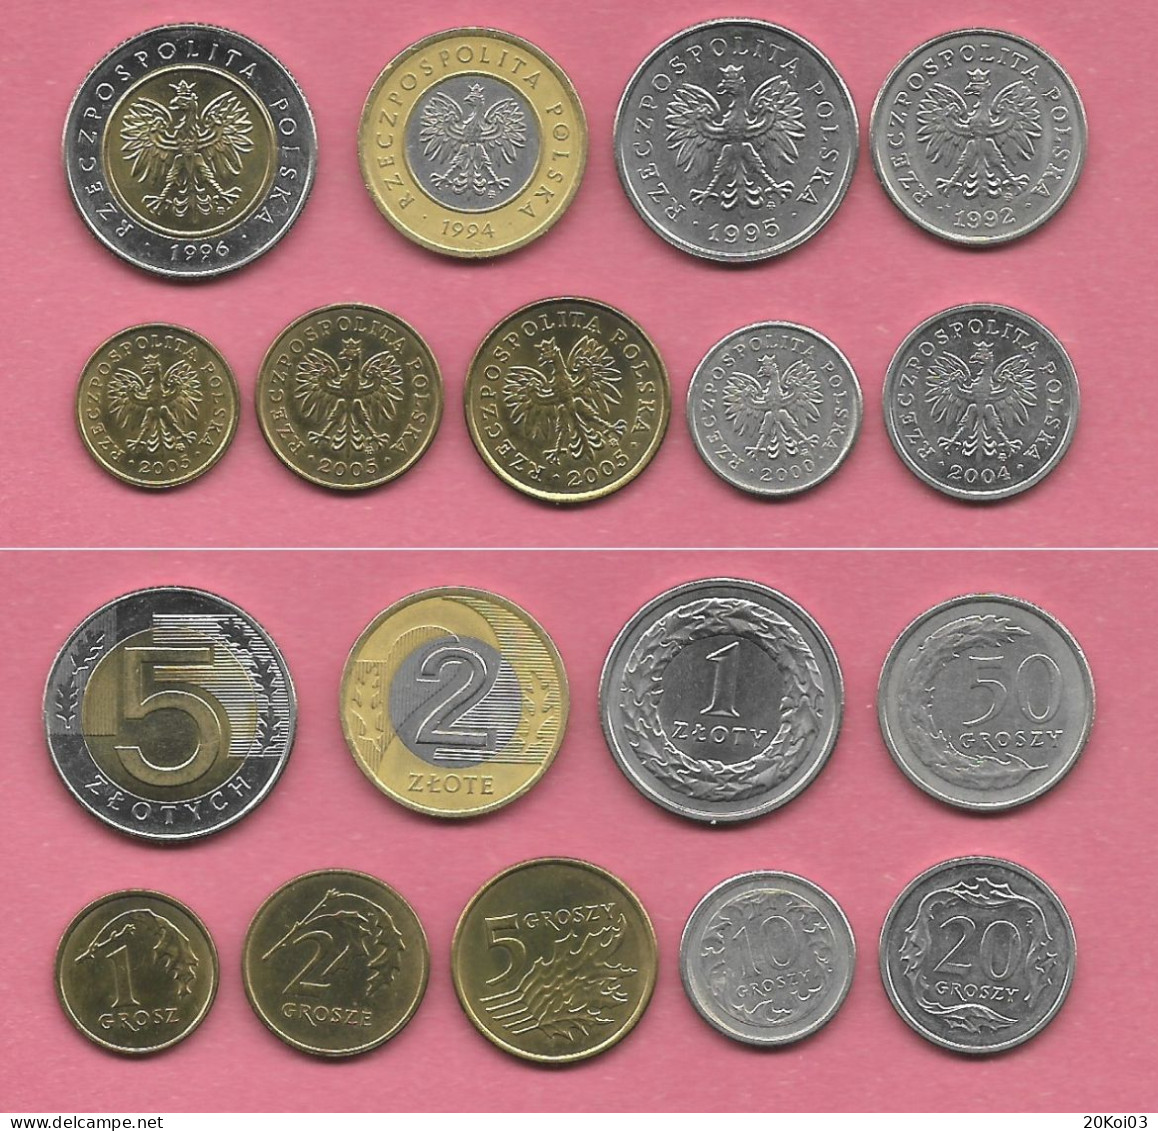 Poland Set Of 9 Coins 1992-2005 (1+2+5+10+20+50 Groszy+1+2+5 Zlotych)_toutes Les Pièces Utilisées, All Coin Used - Poland